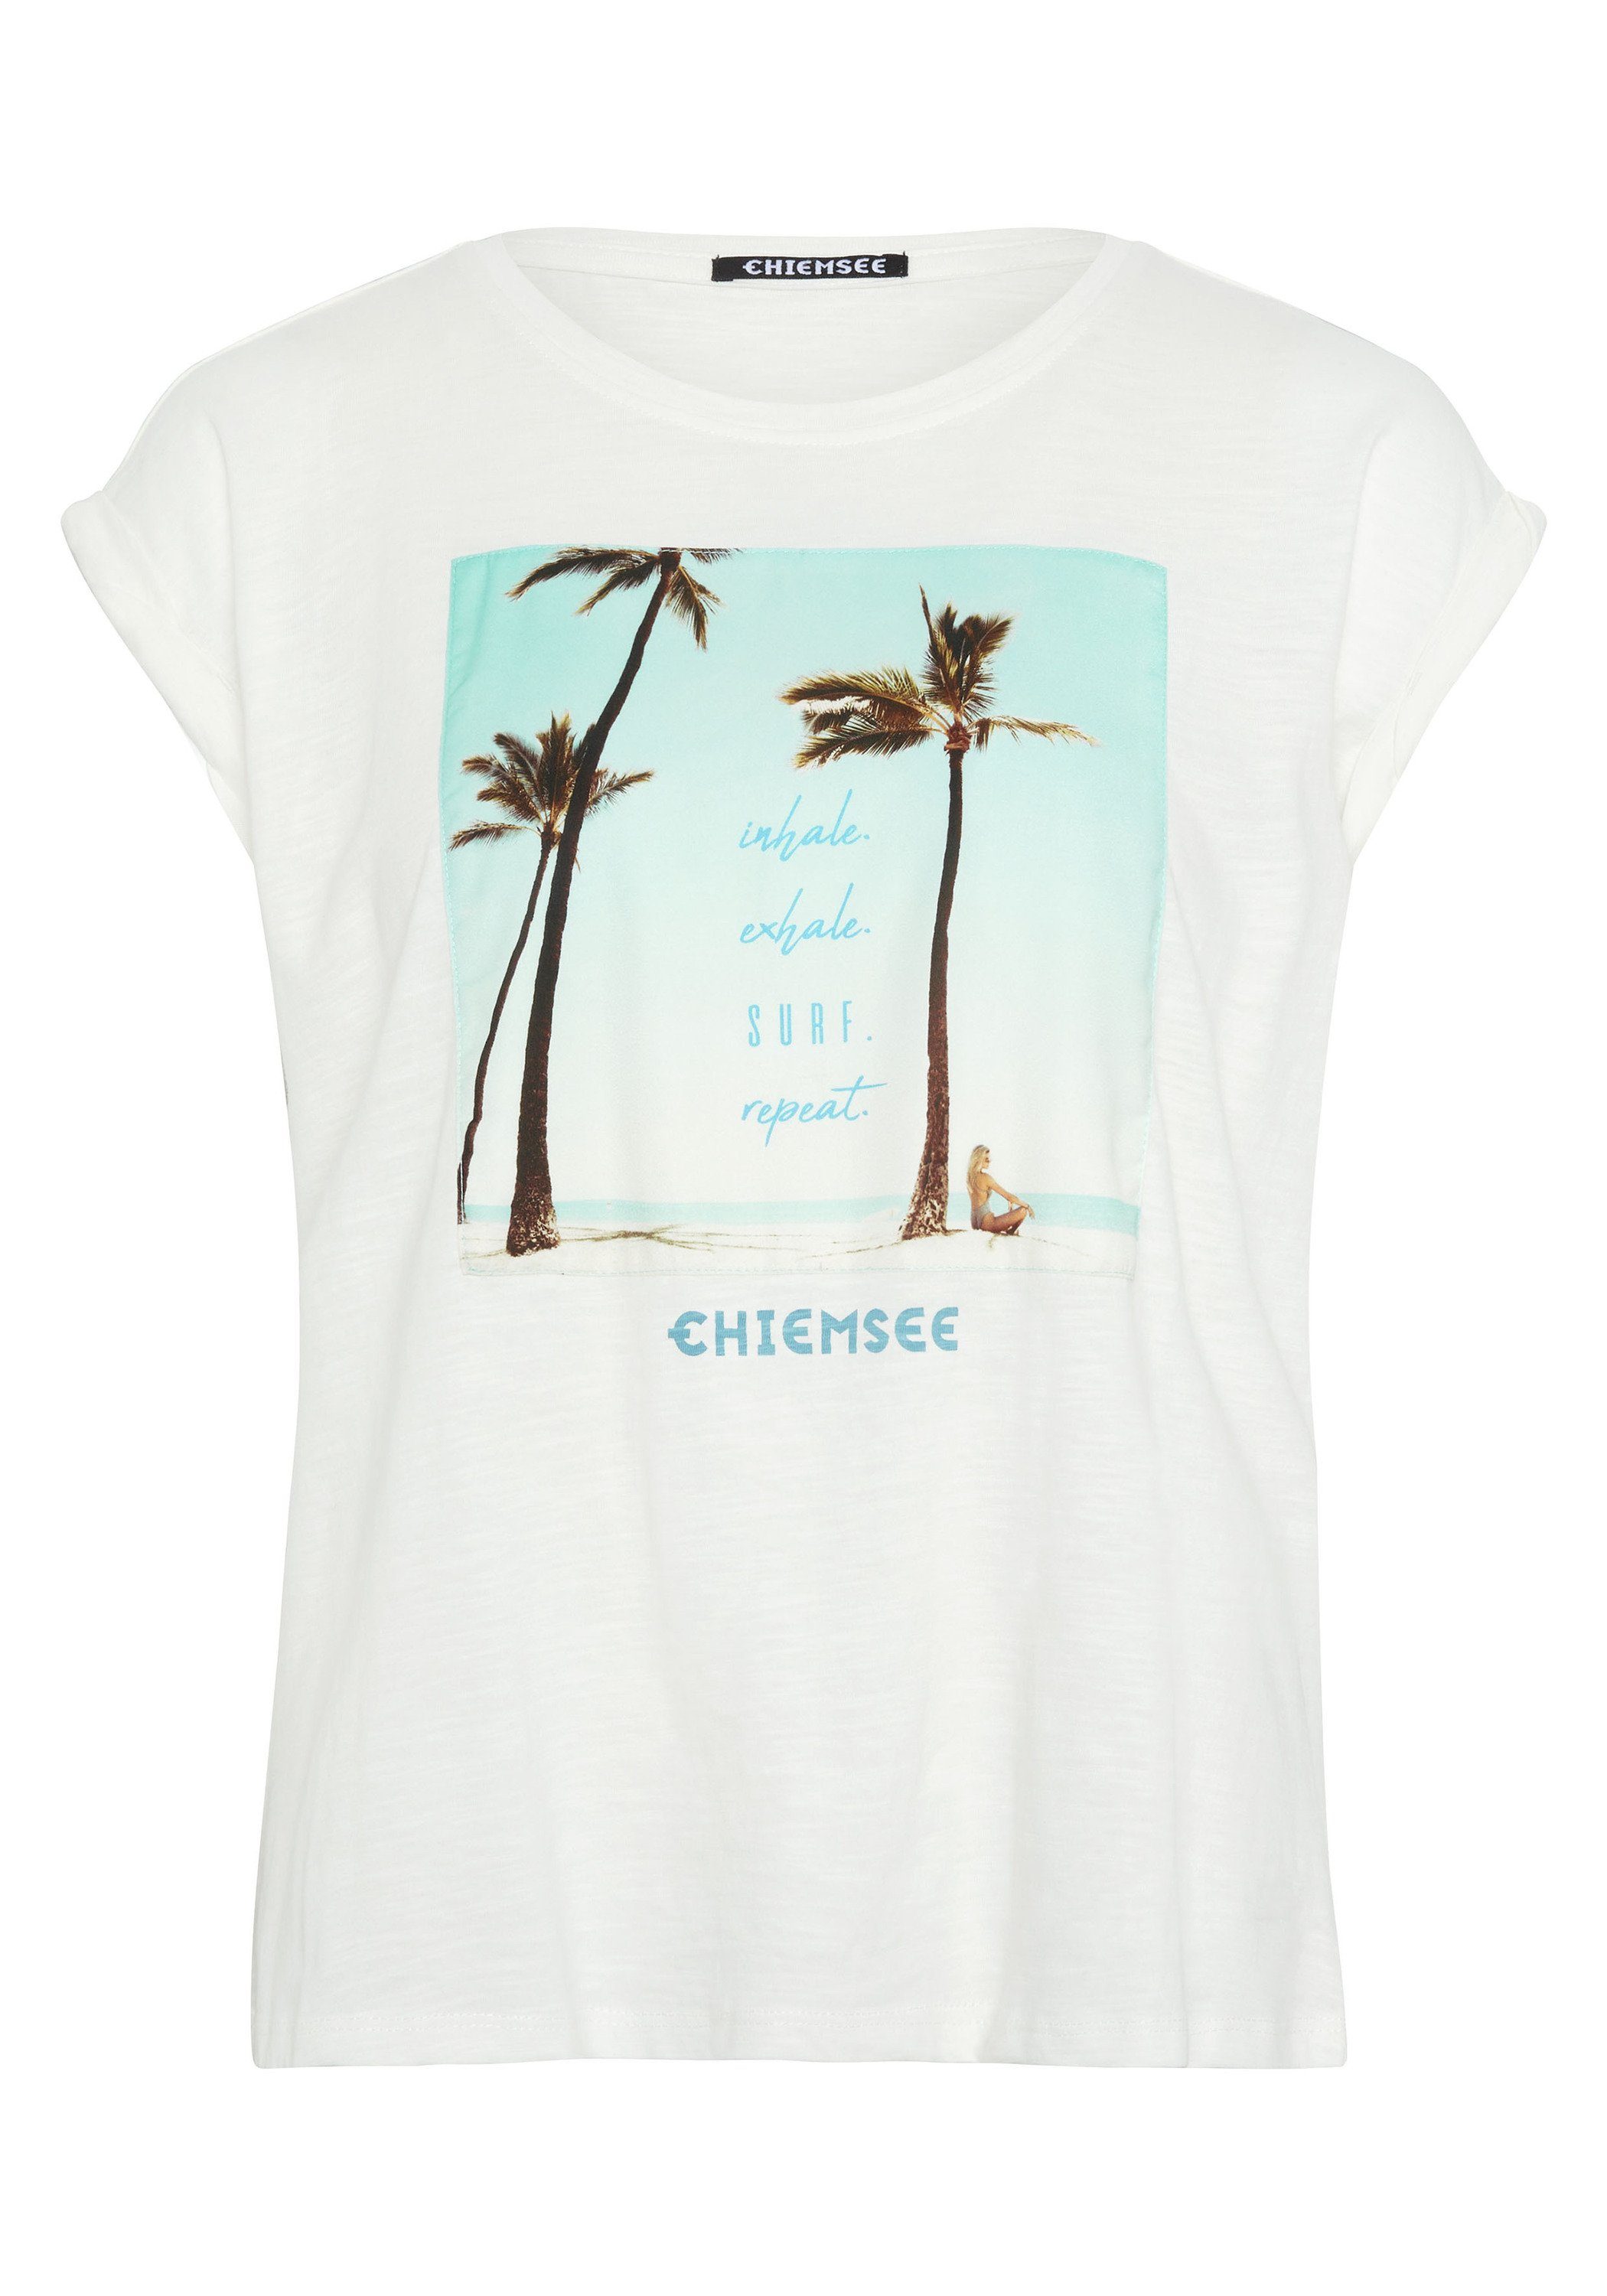 Print-Shirt Star T-Shirt 1 mit White Fotoprint 11-4202 Chiemsee